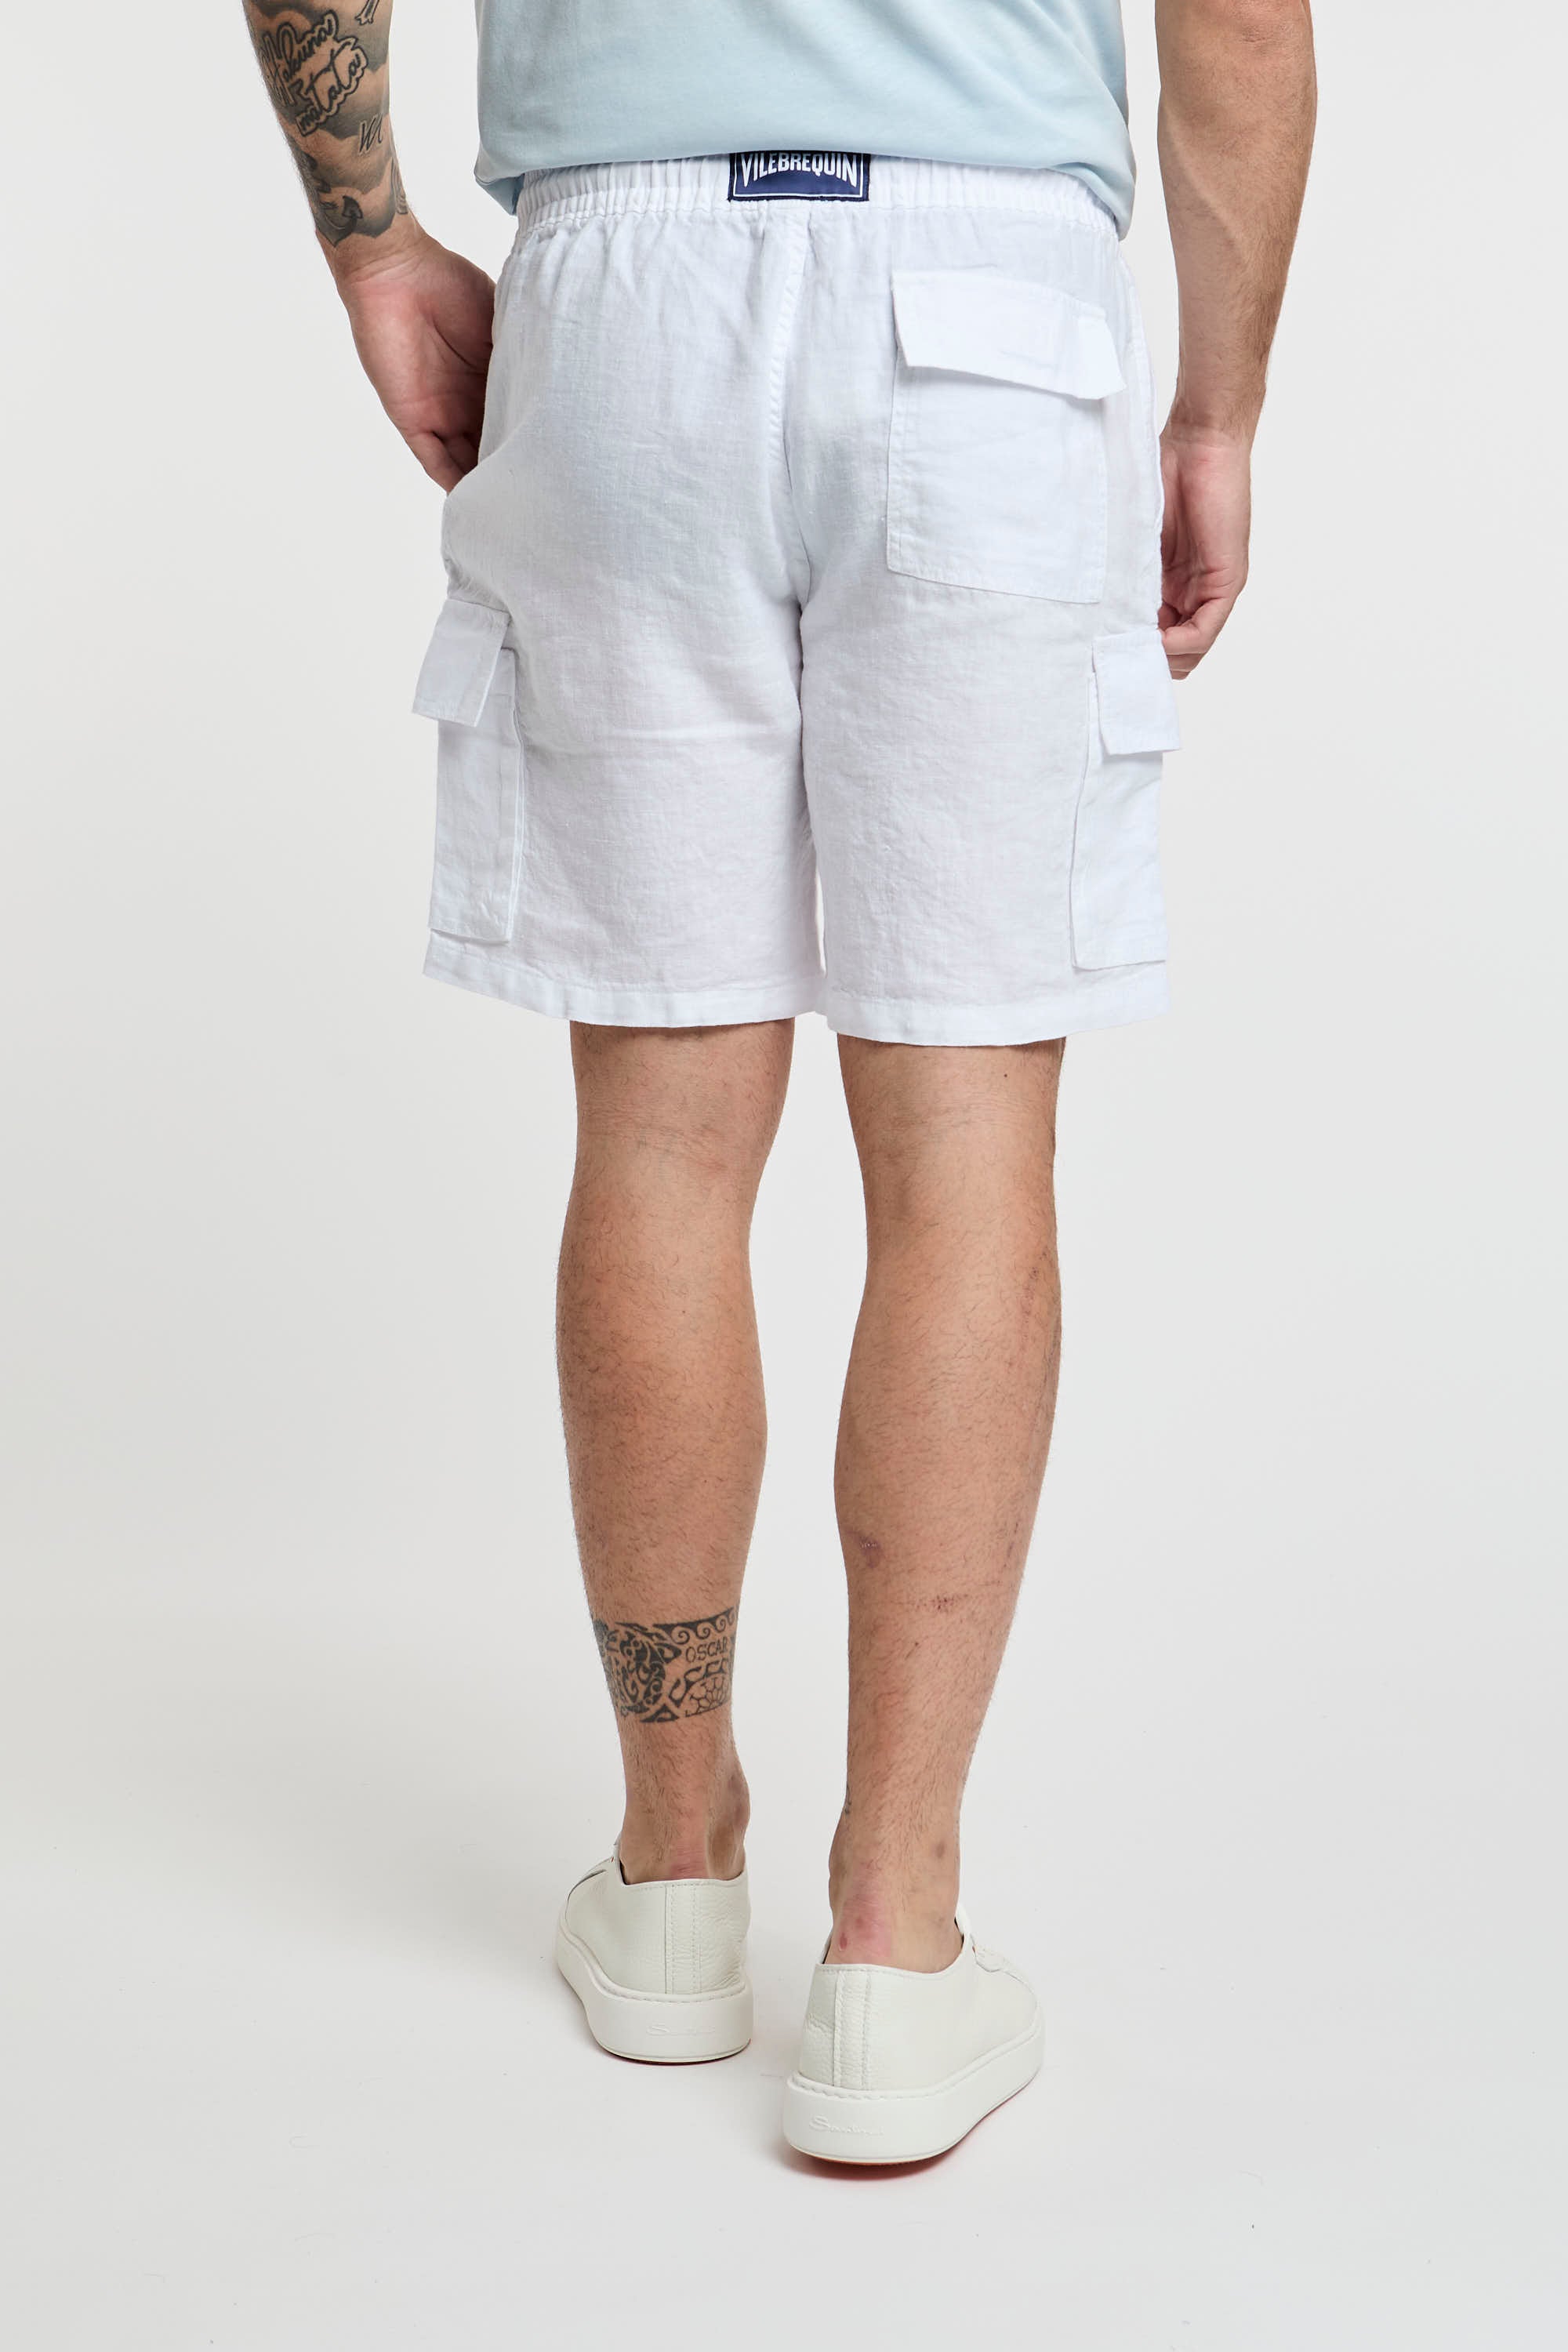 Vilebrequin Linen Bermuda Shorts in White-6